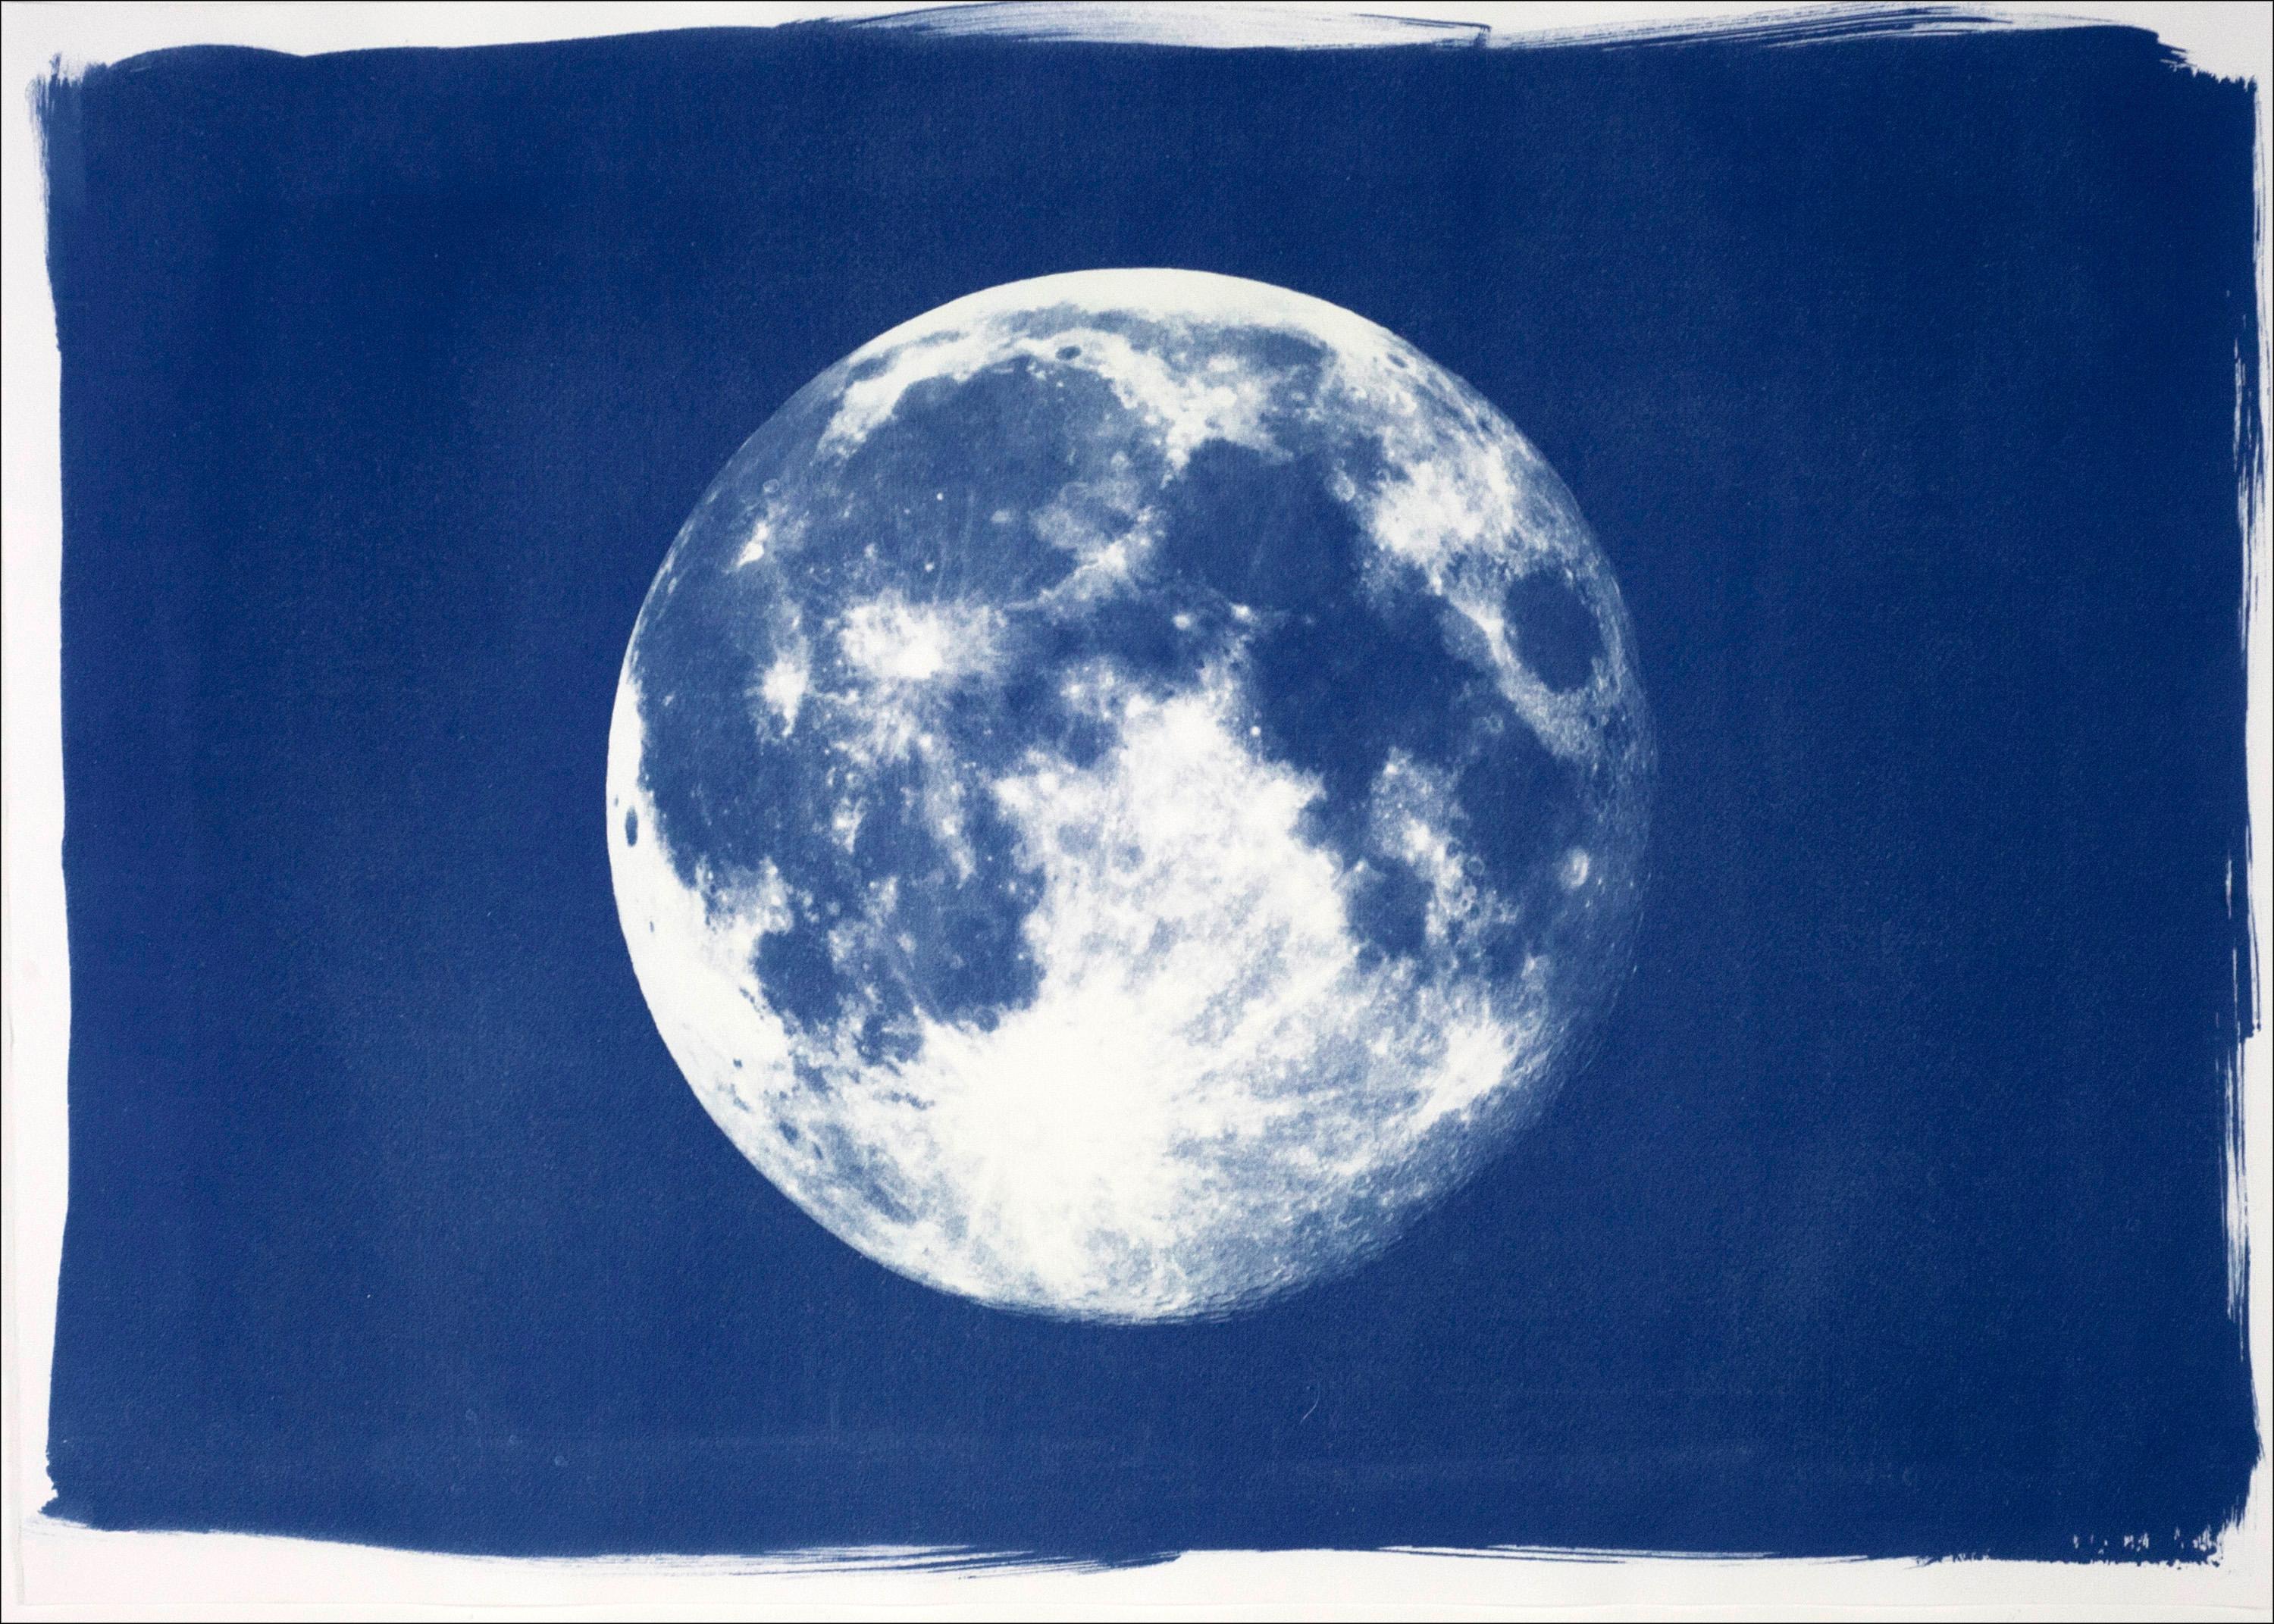 Full Blue Moon, Handmade Cyanotype on Watercolor Paper, Cosmos, Deep Blue Space